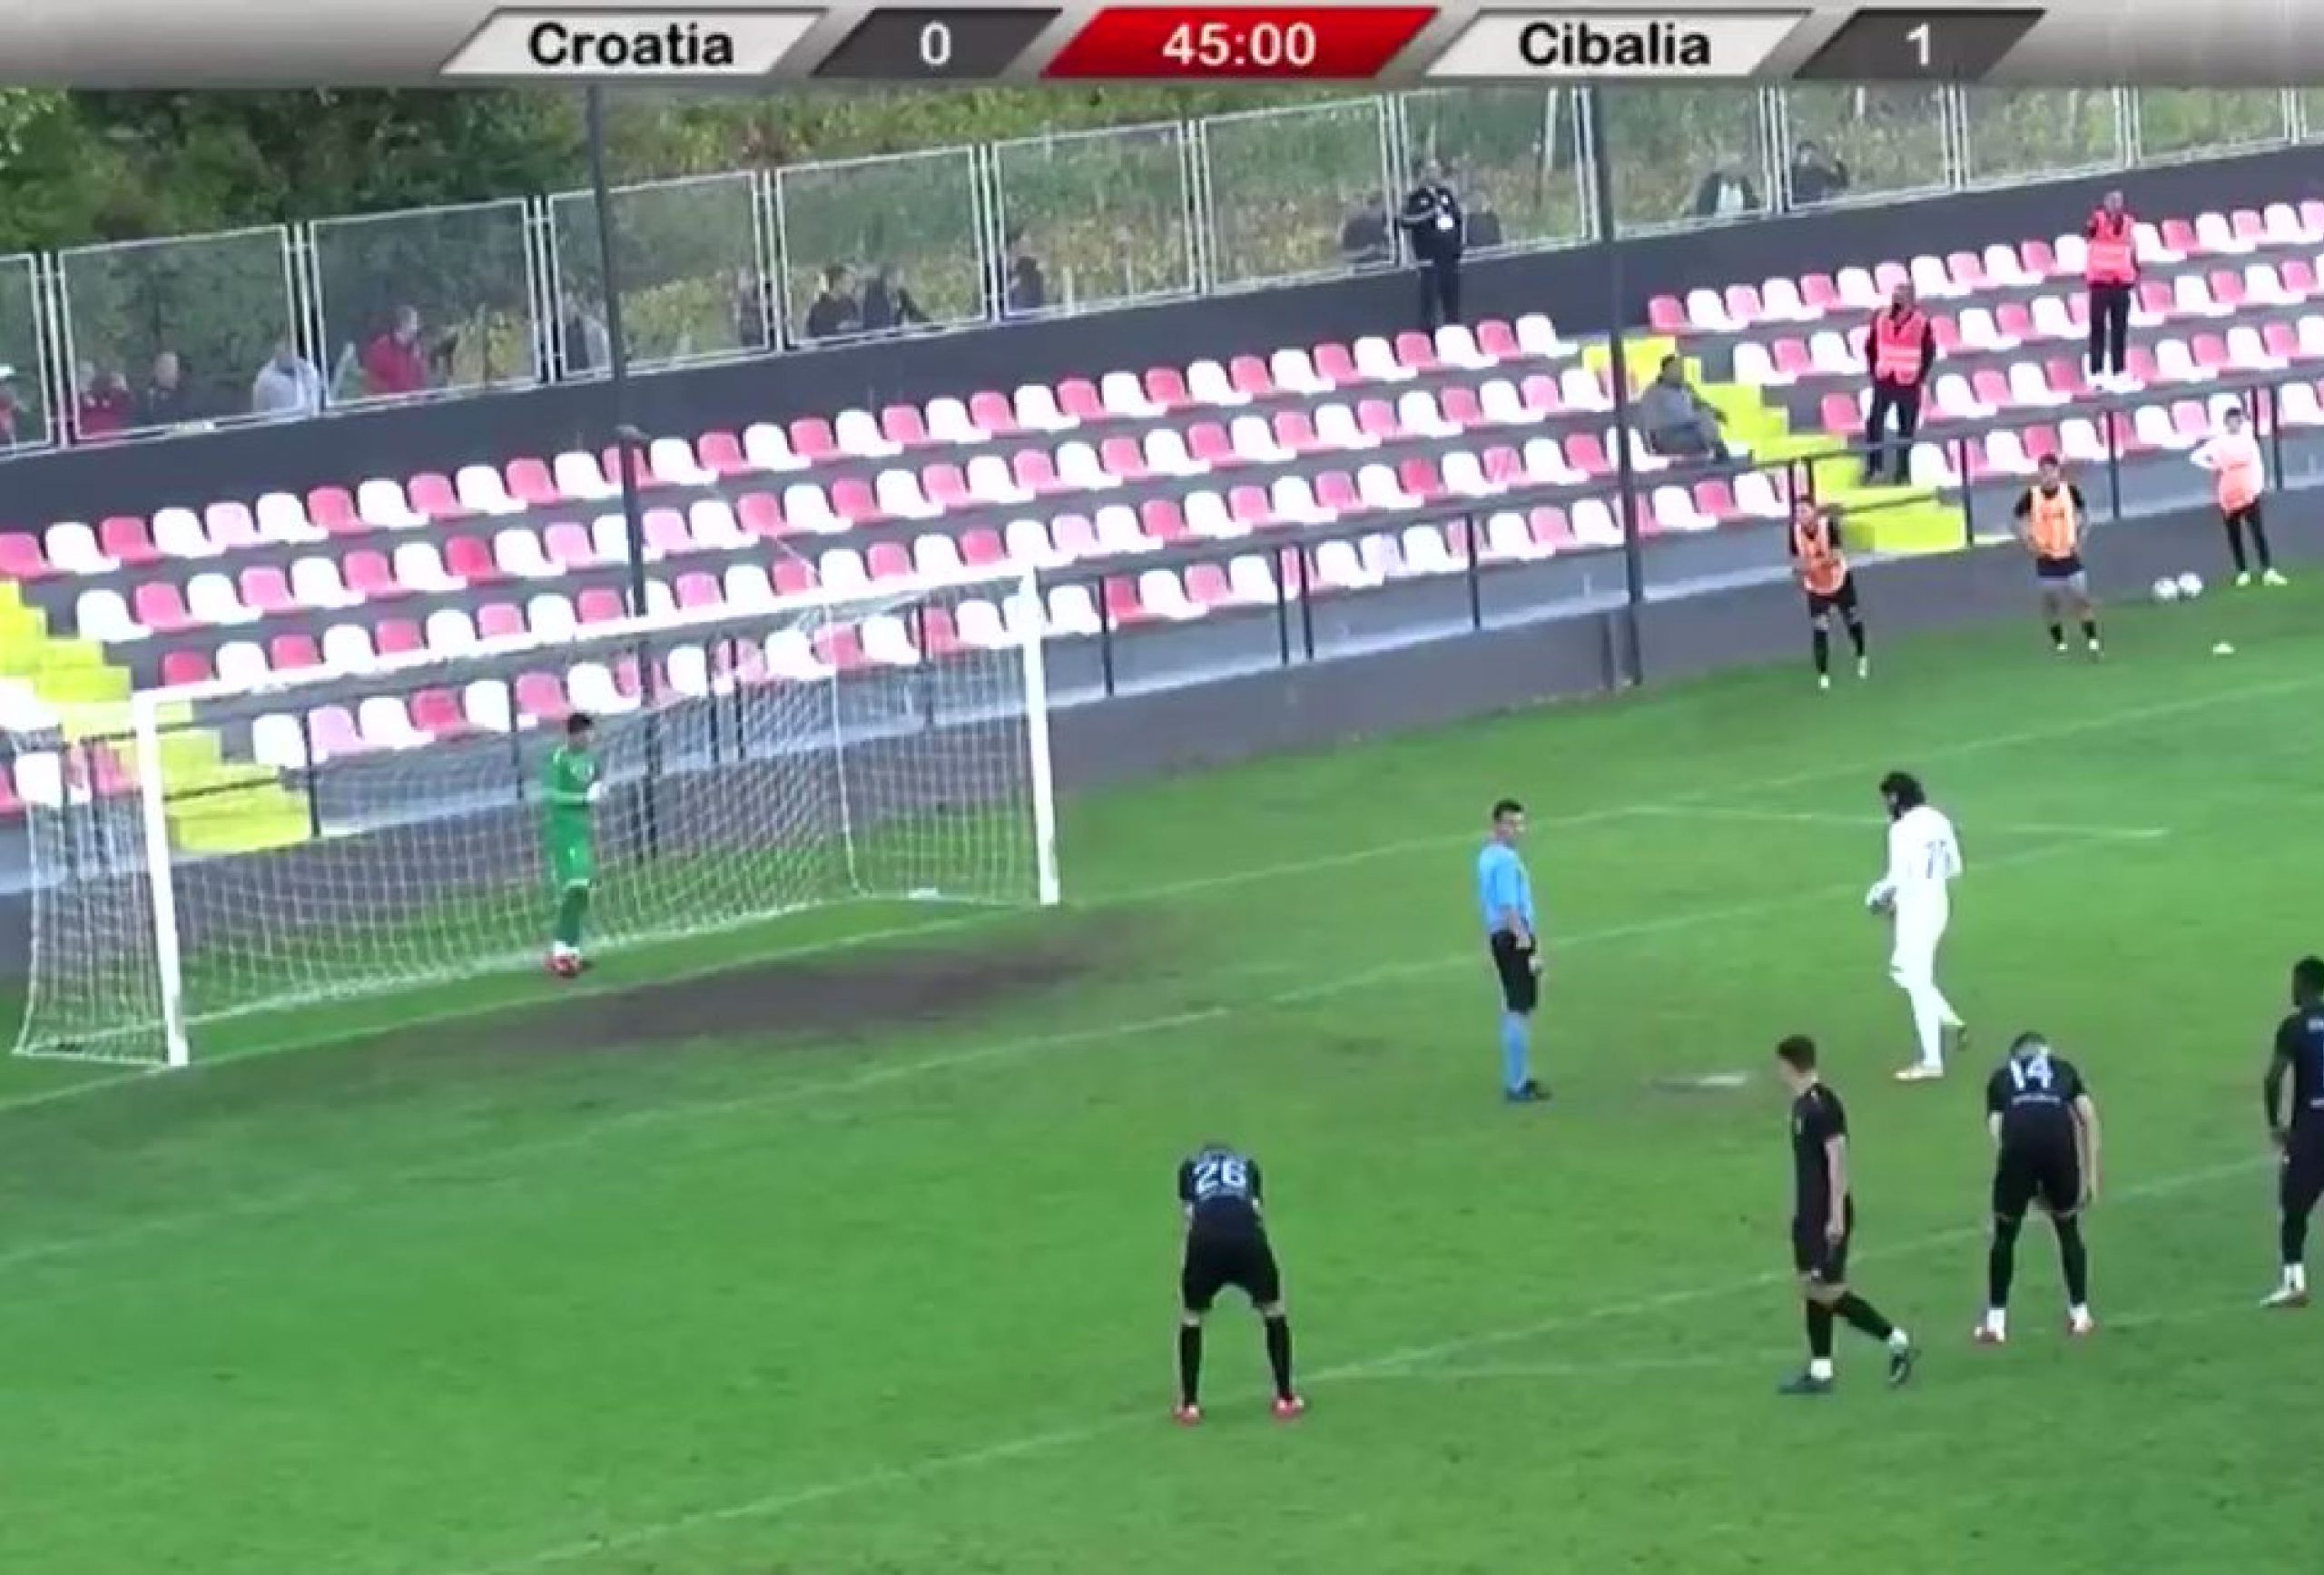 Tomislav Mrkonjic taking a penalty against Cibalia in 2nd tier of Croatian football